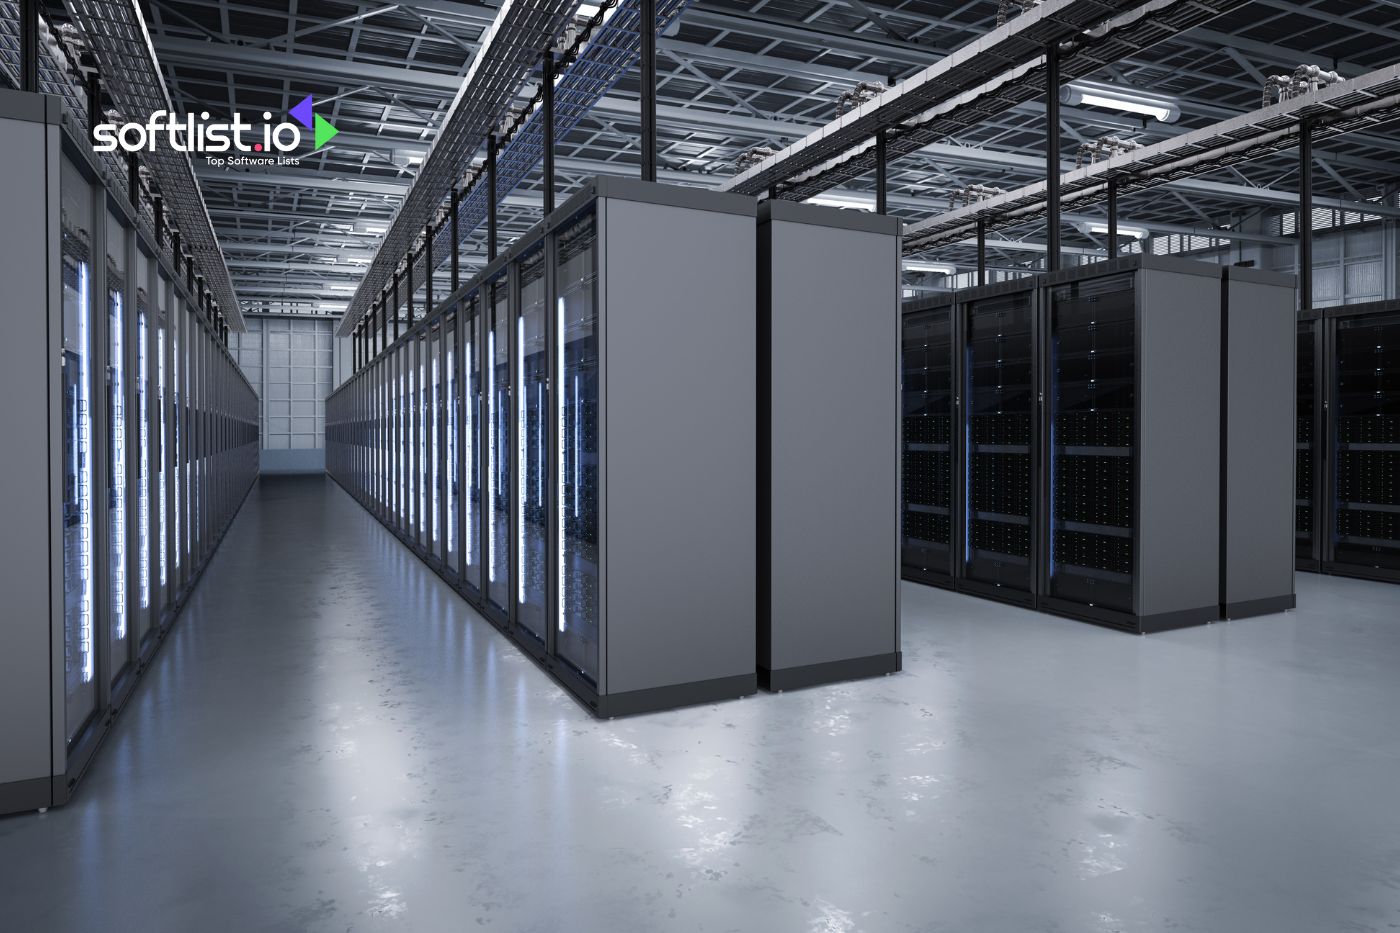 Spacious, modern data center with rows of server racks